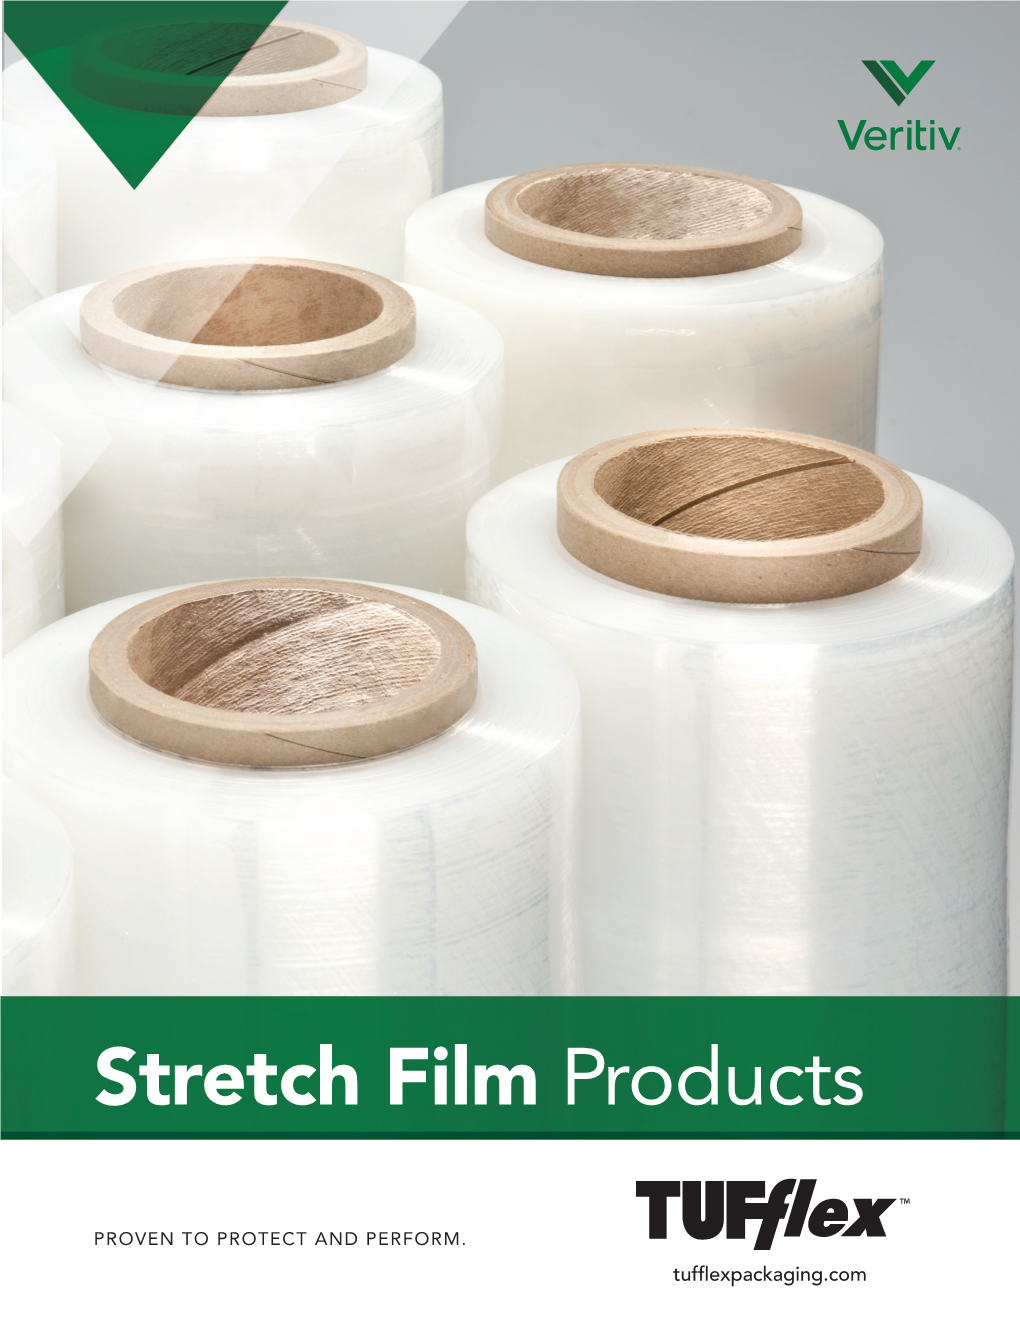 Stretch Film Products